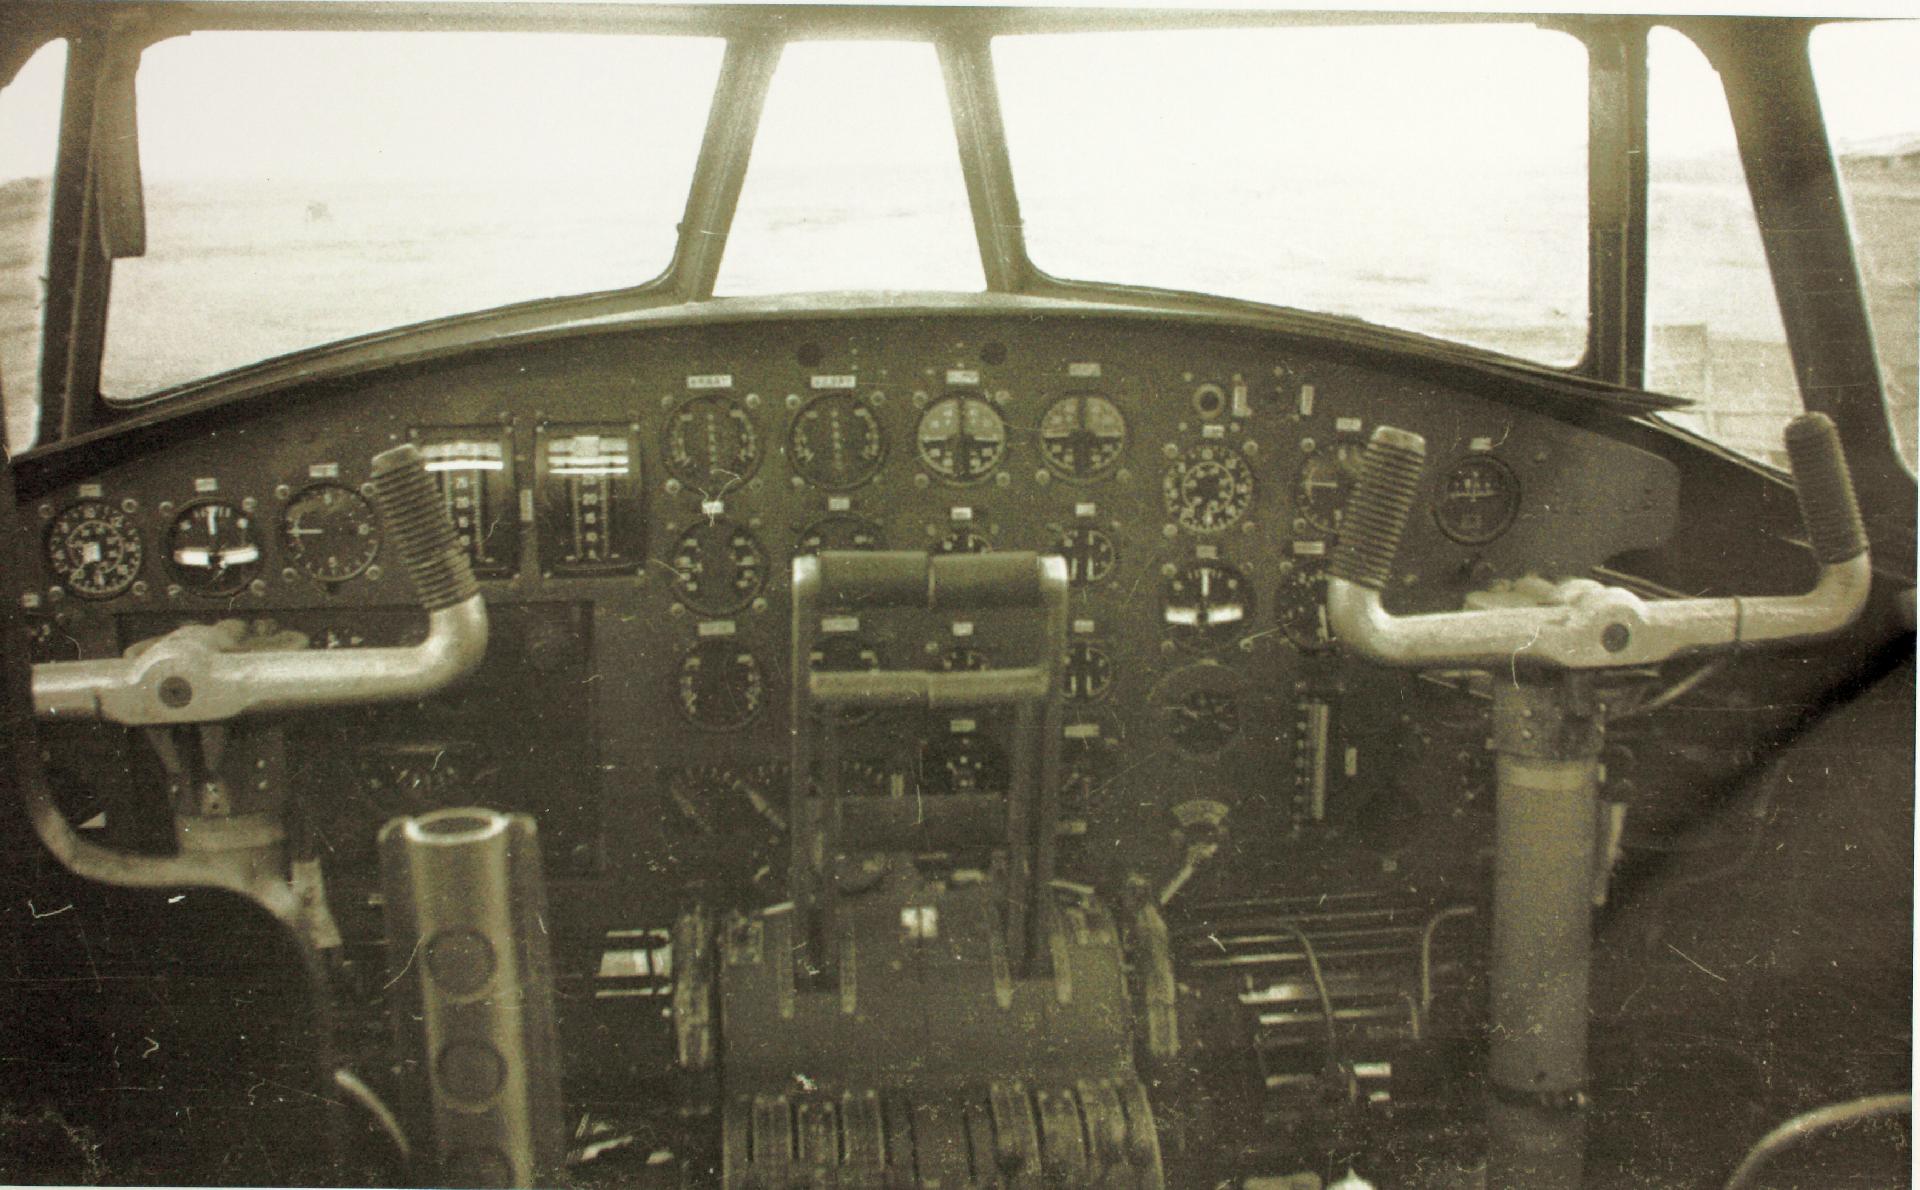 Nakajima_G8n1_Cockpit1